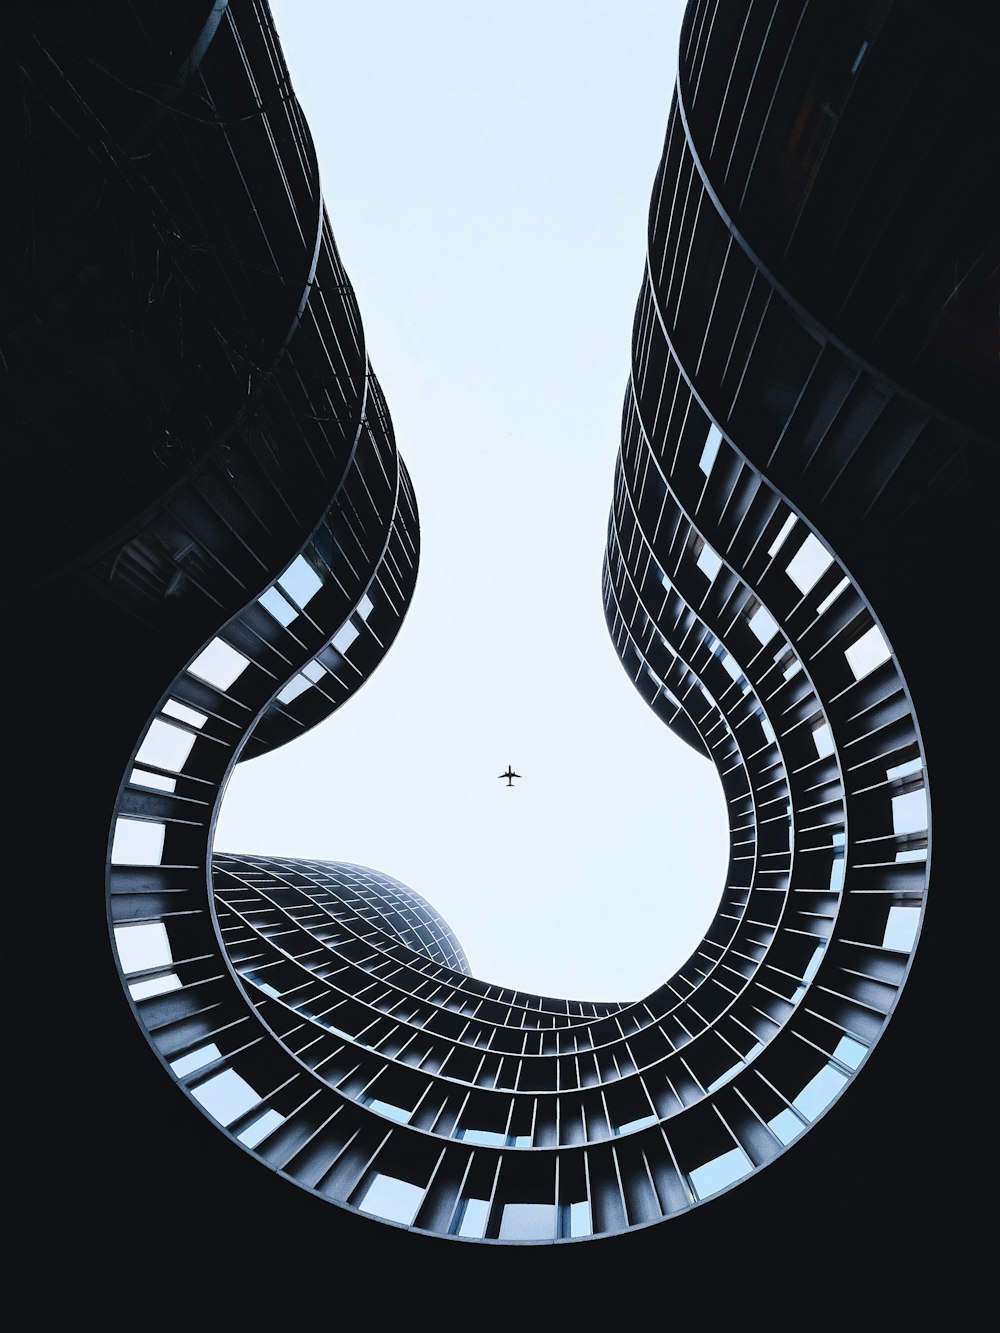 Un avión volando a través de un edificio muy alto